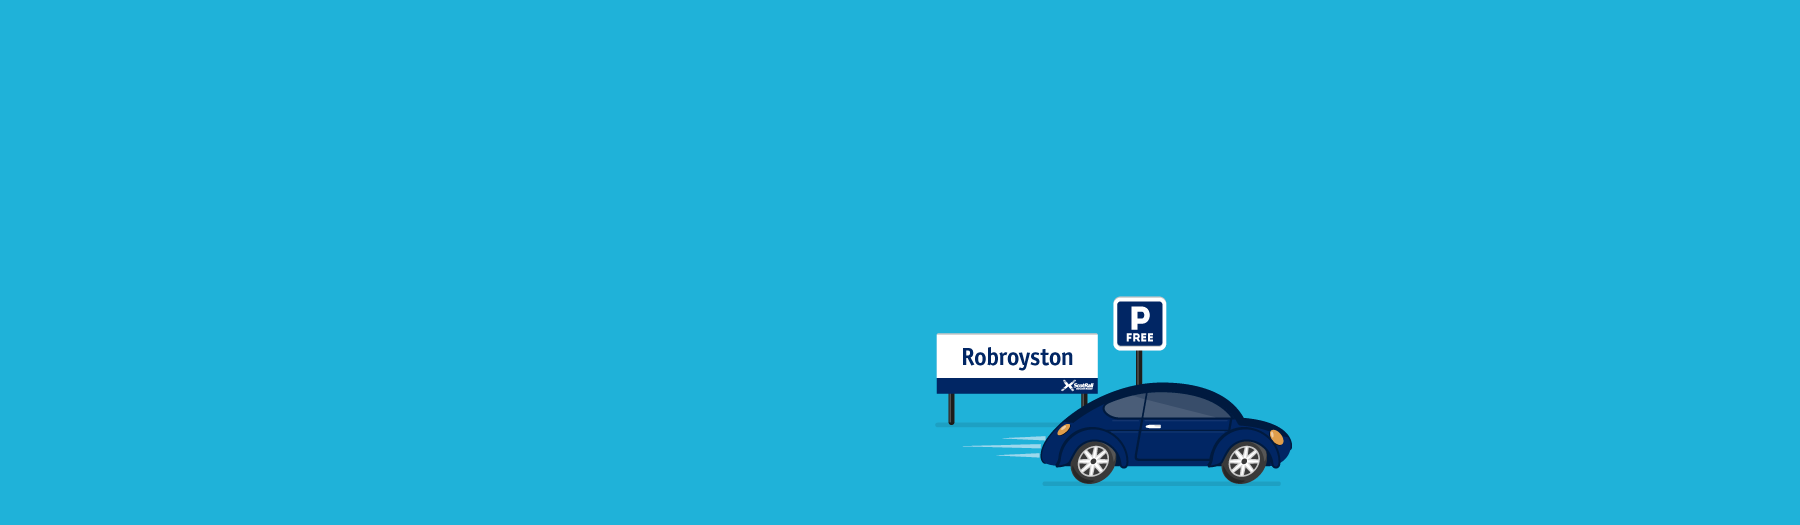 Robroyston station graphic